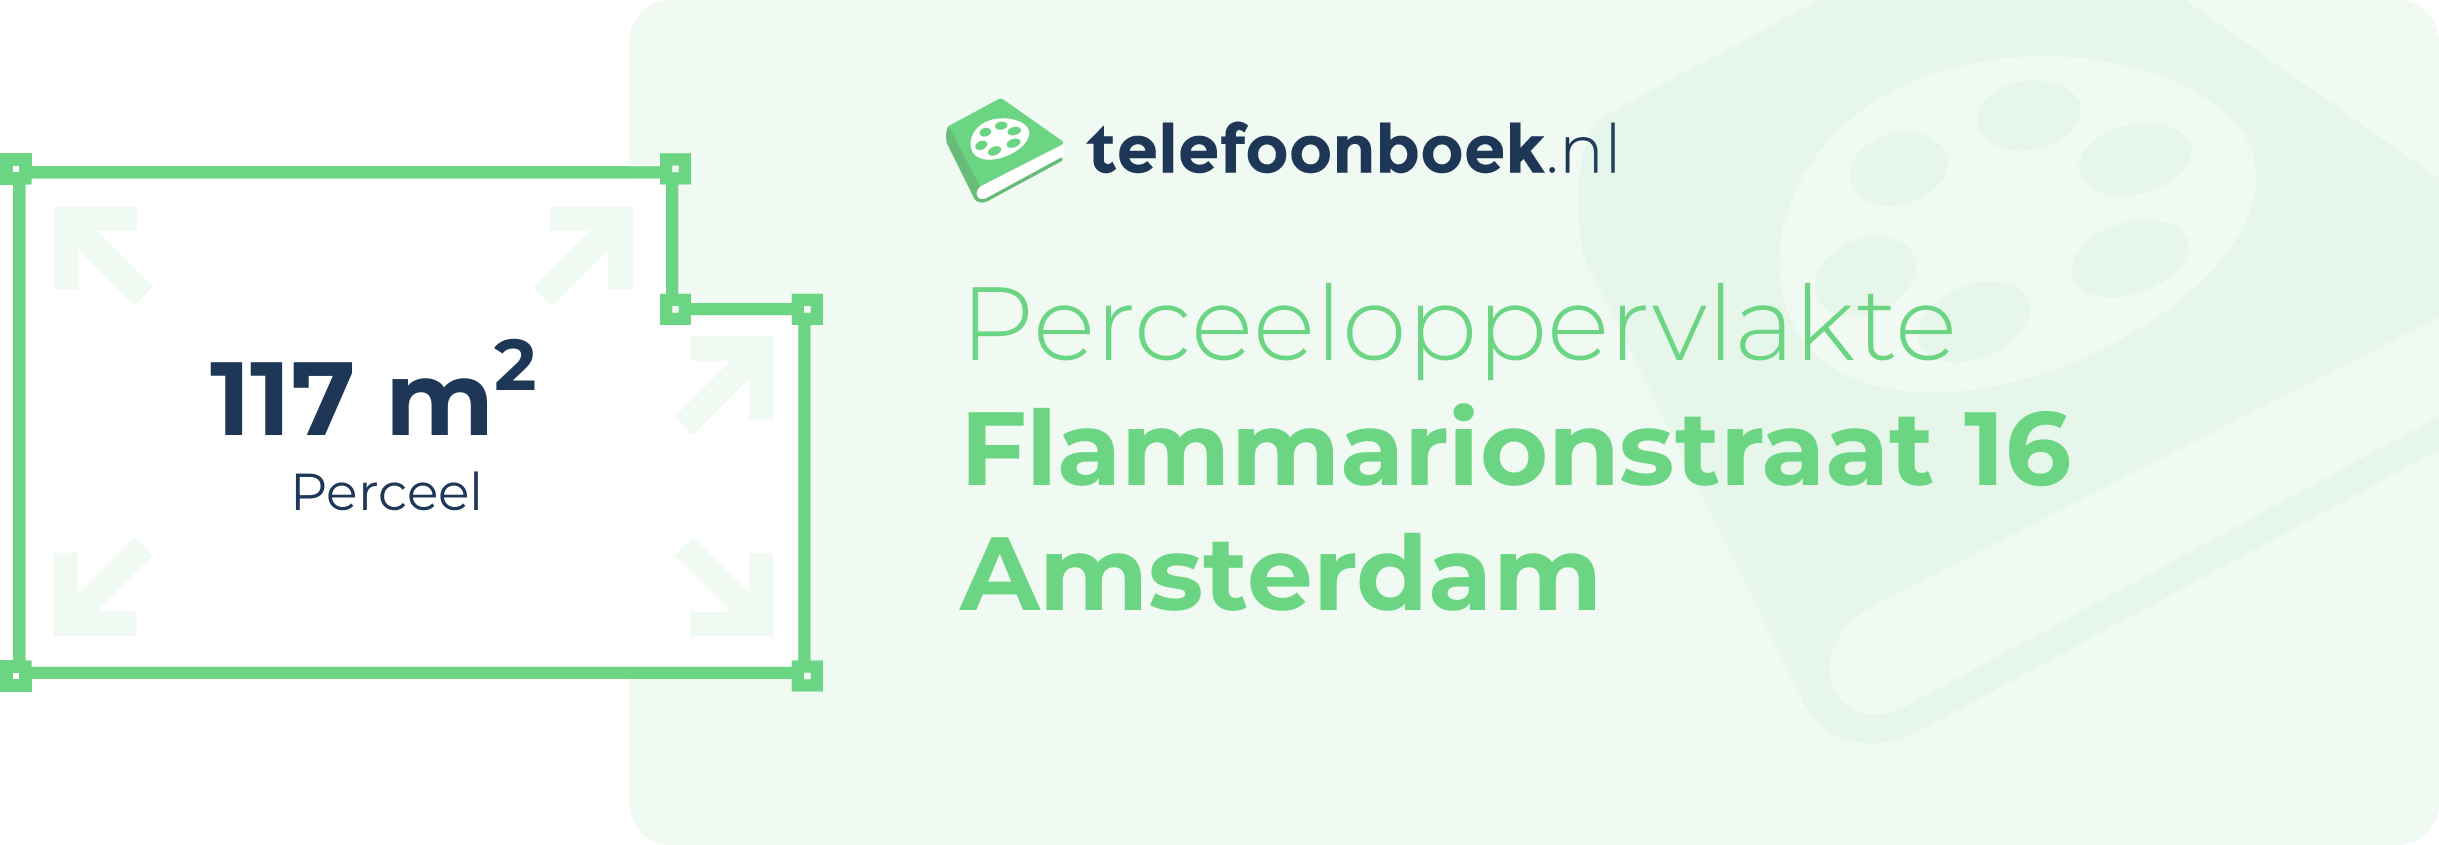 Perceeloppervlakte Flammarionstraat 16 Amsterdam